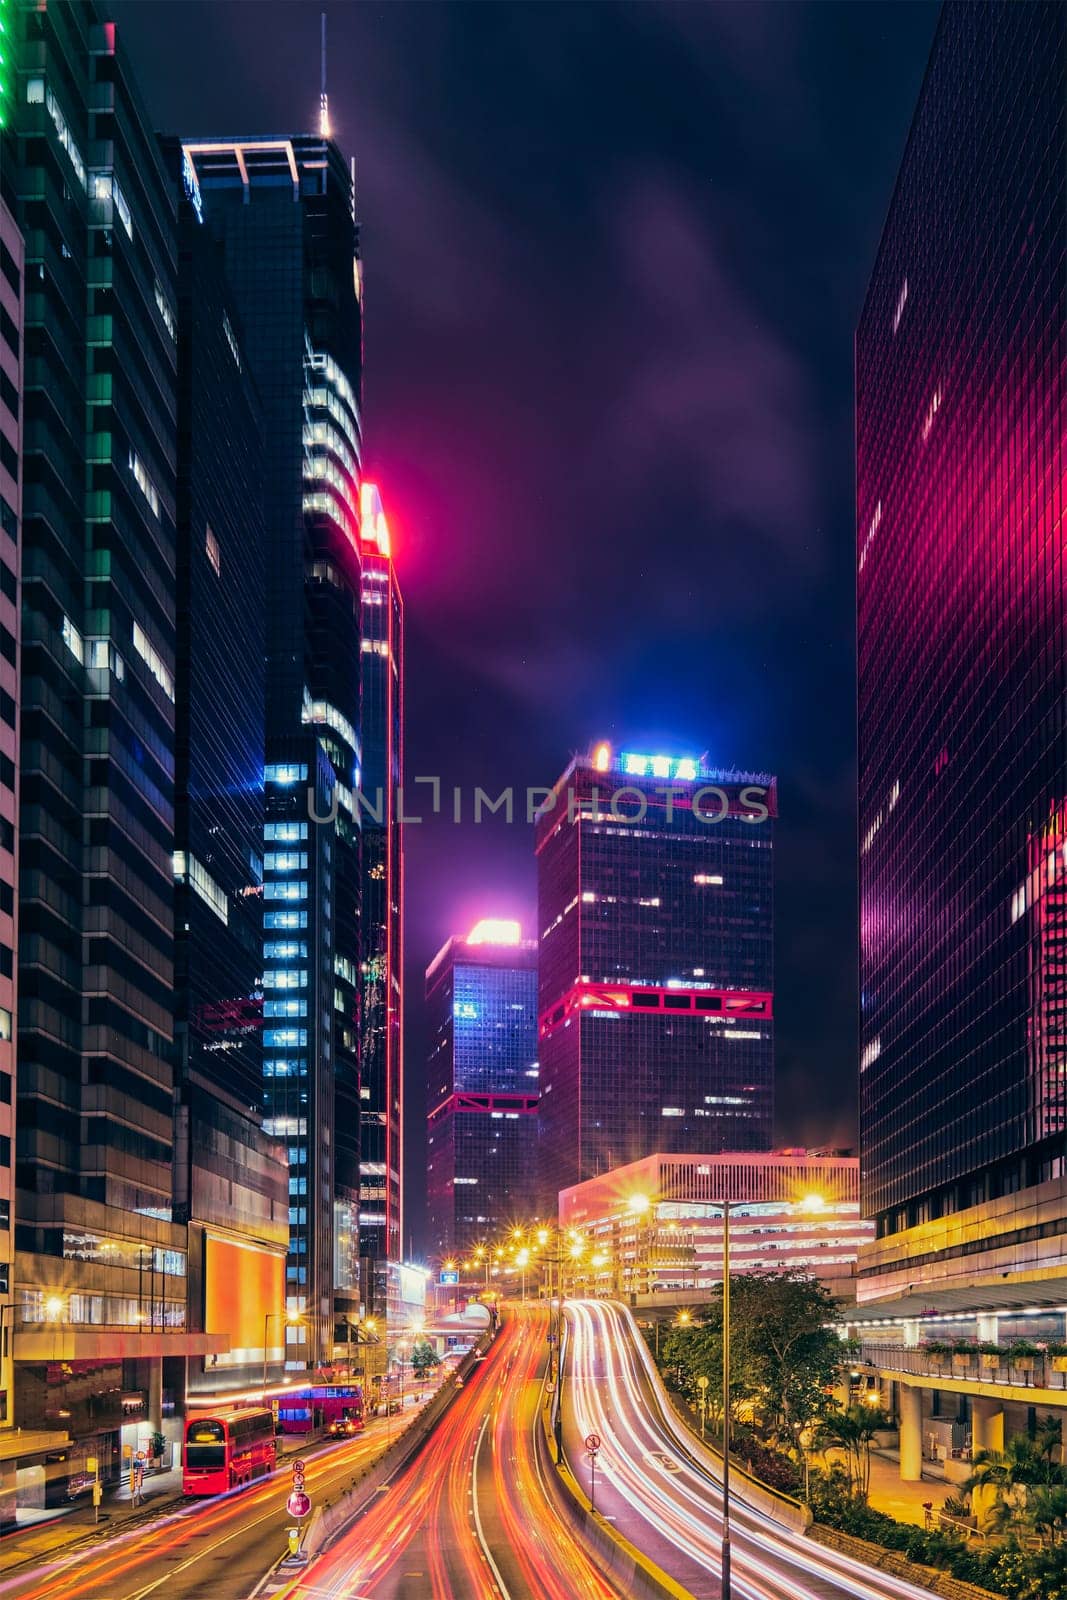 Street traffic in Hong Kong at night by dimol